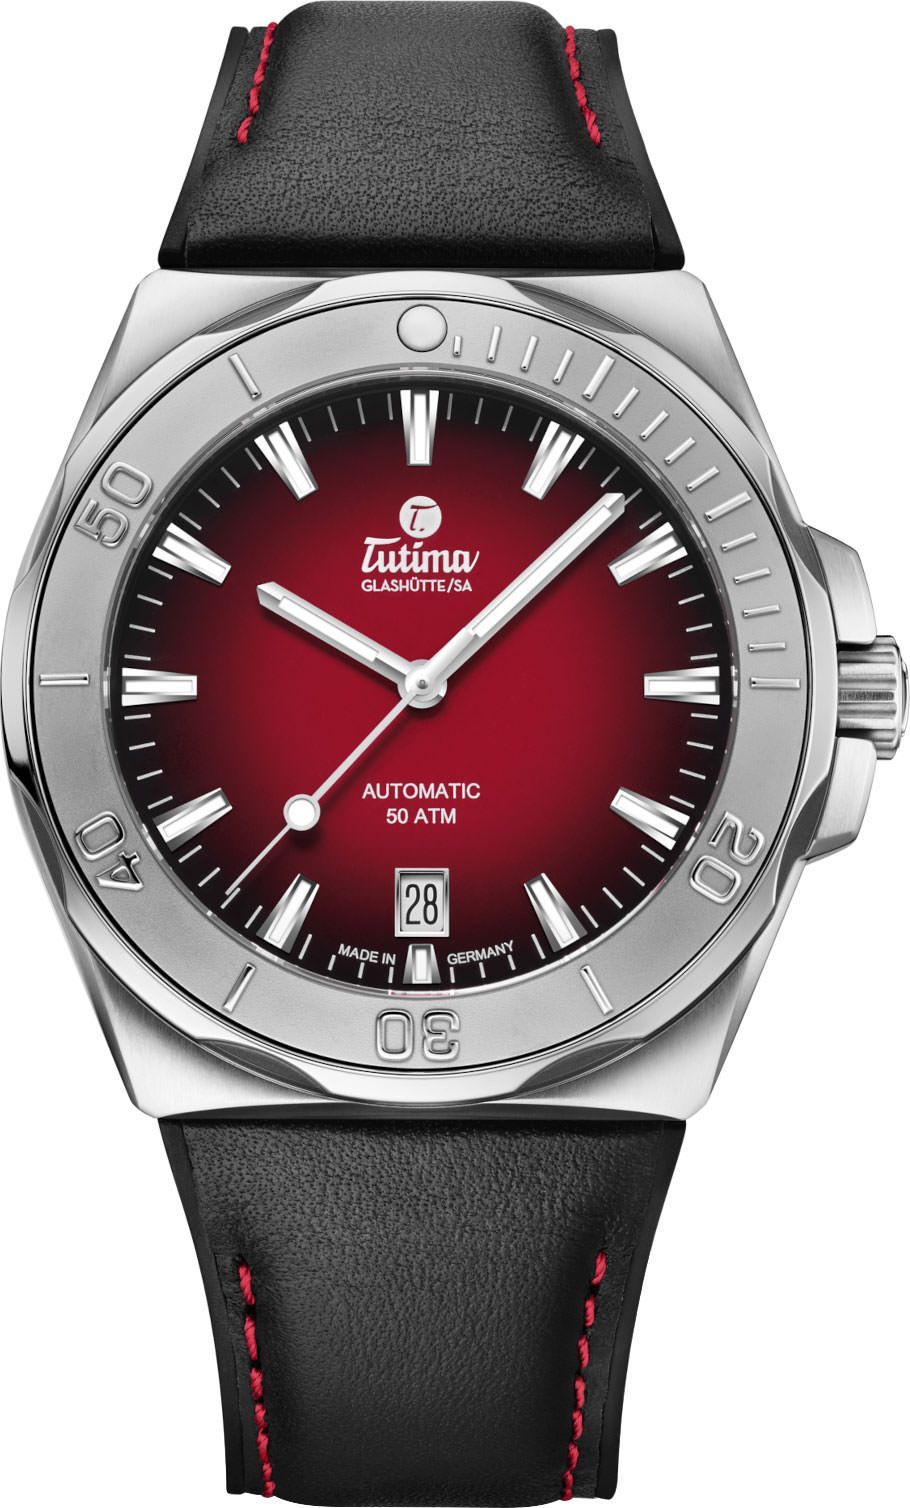 Tutima Glashütte Seven Seas S 40 mm Watch in Red Dial For Men - 1